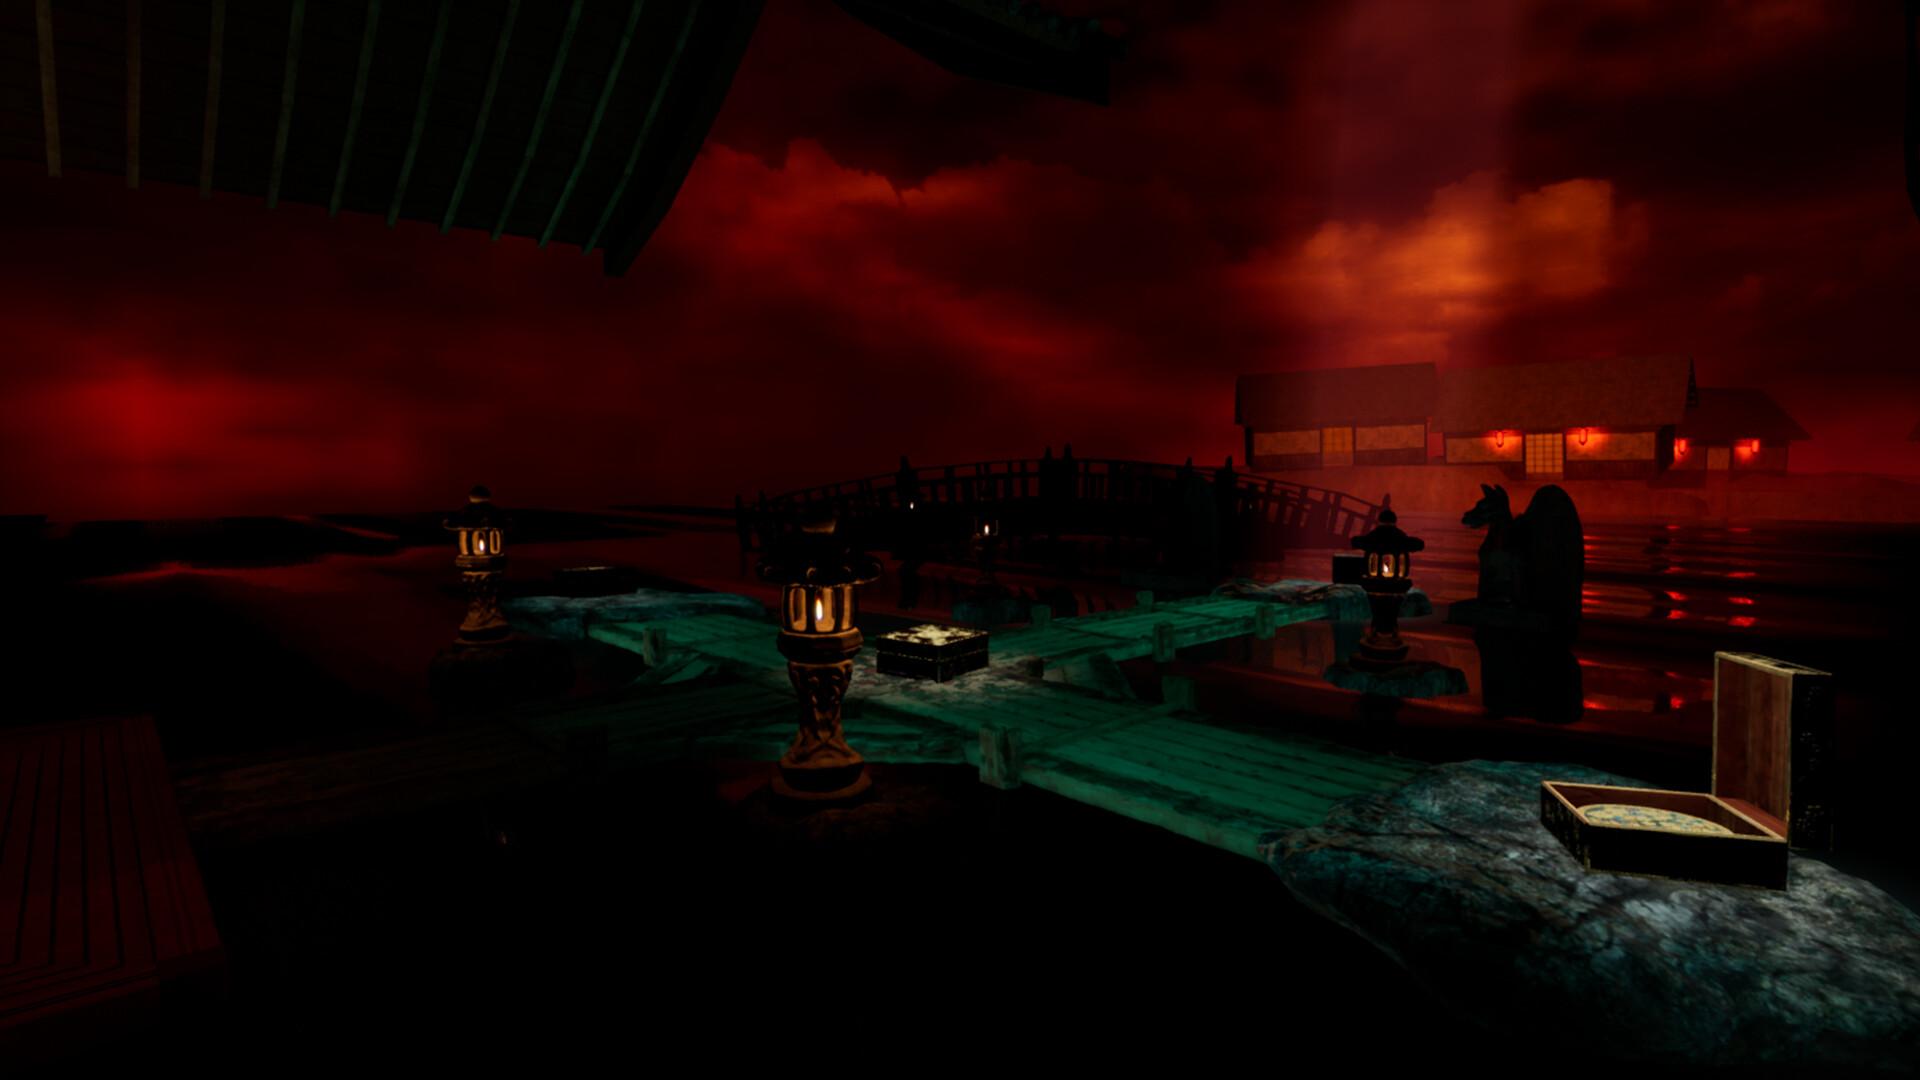 Screenshot №28 from game Malice